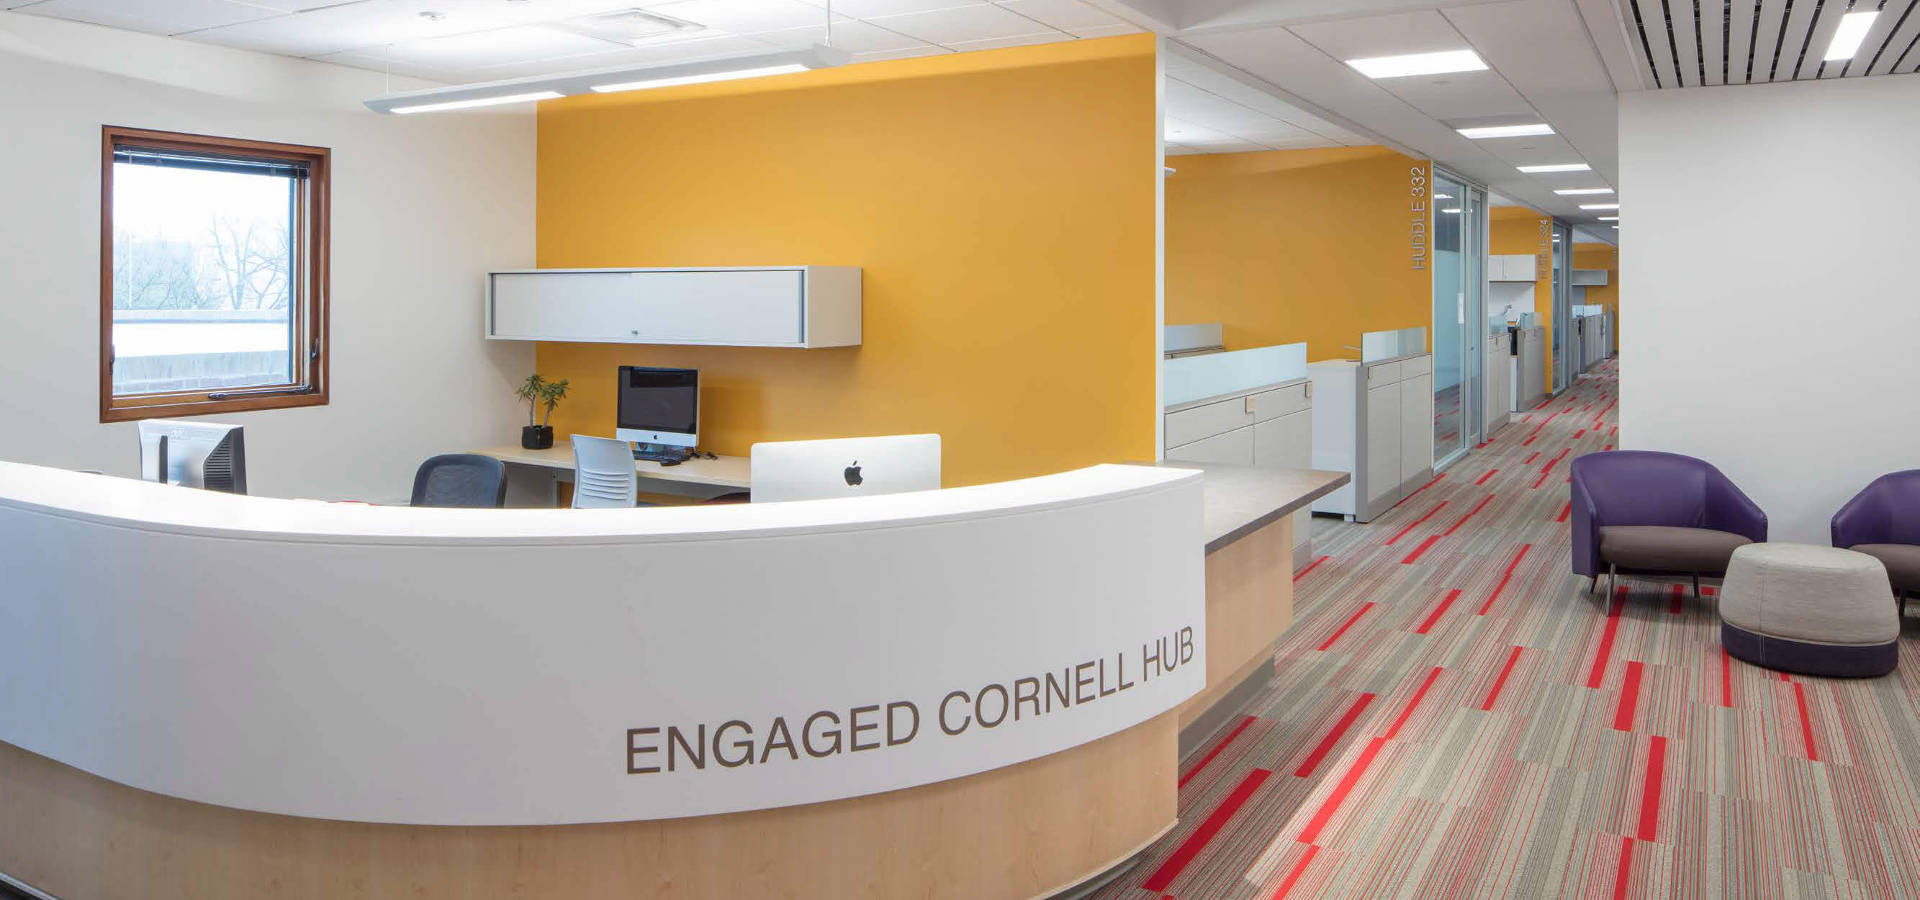 Engaged Cornell Hub, Kennedy Hall, Cornell University